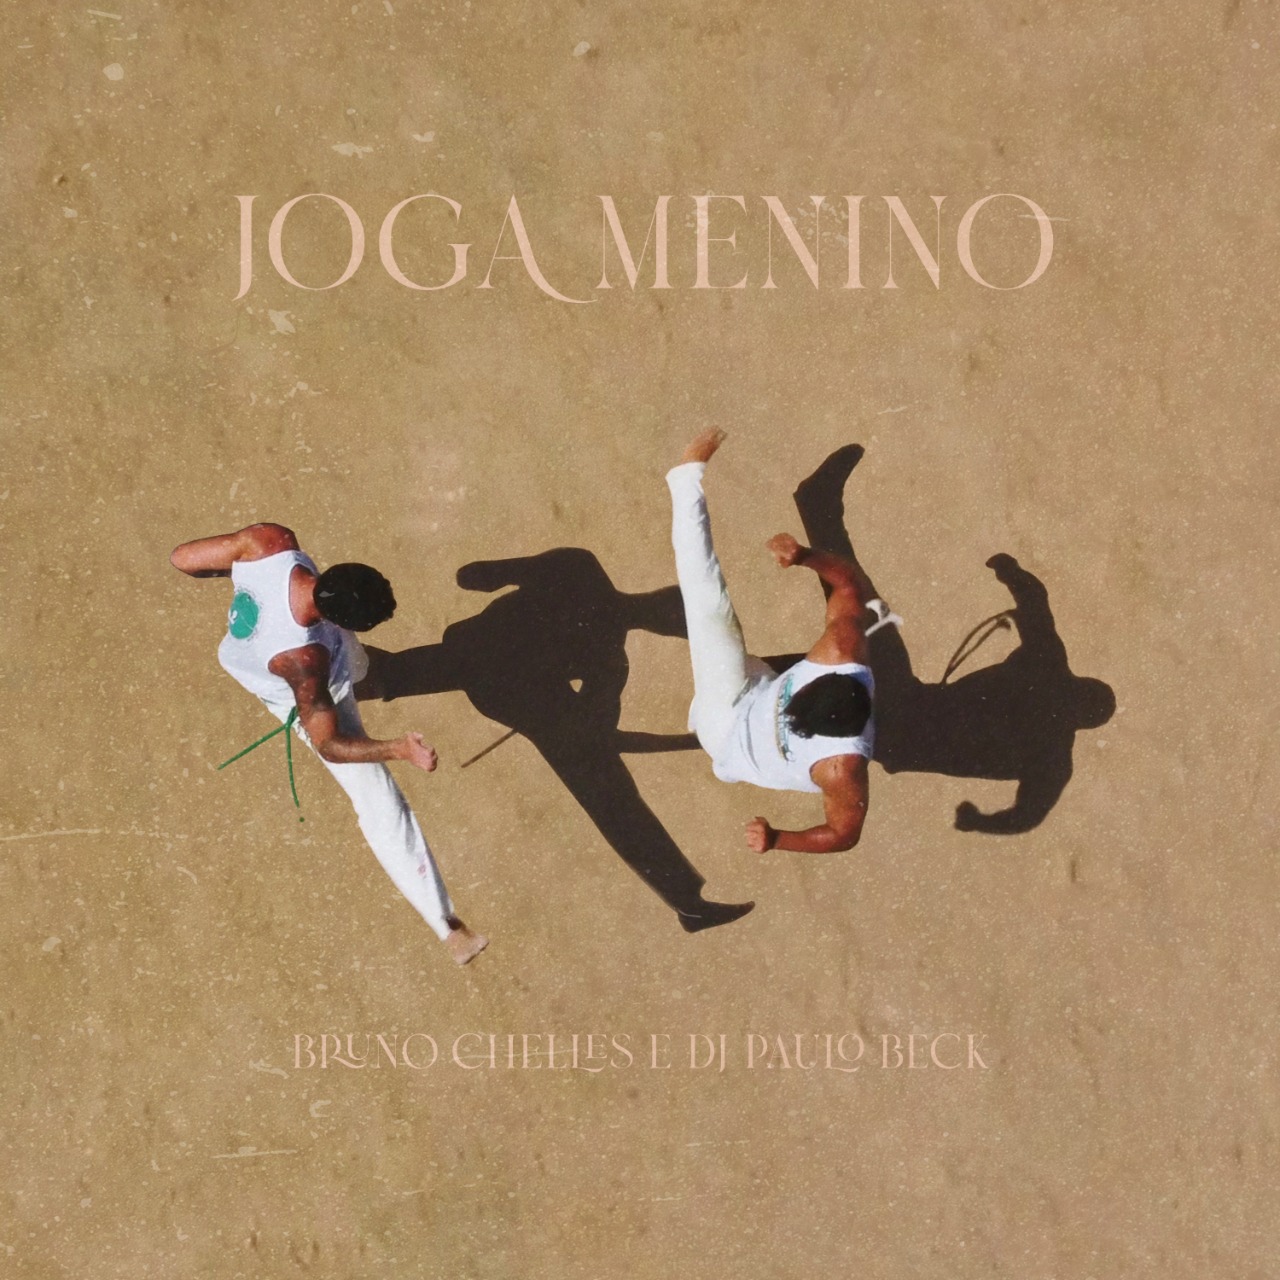 Joga Menino, nova música de Bruno Chelles e DJ Paulo Beck